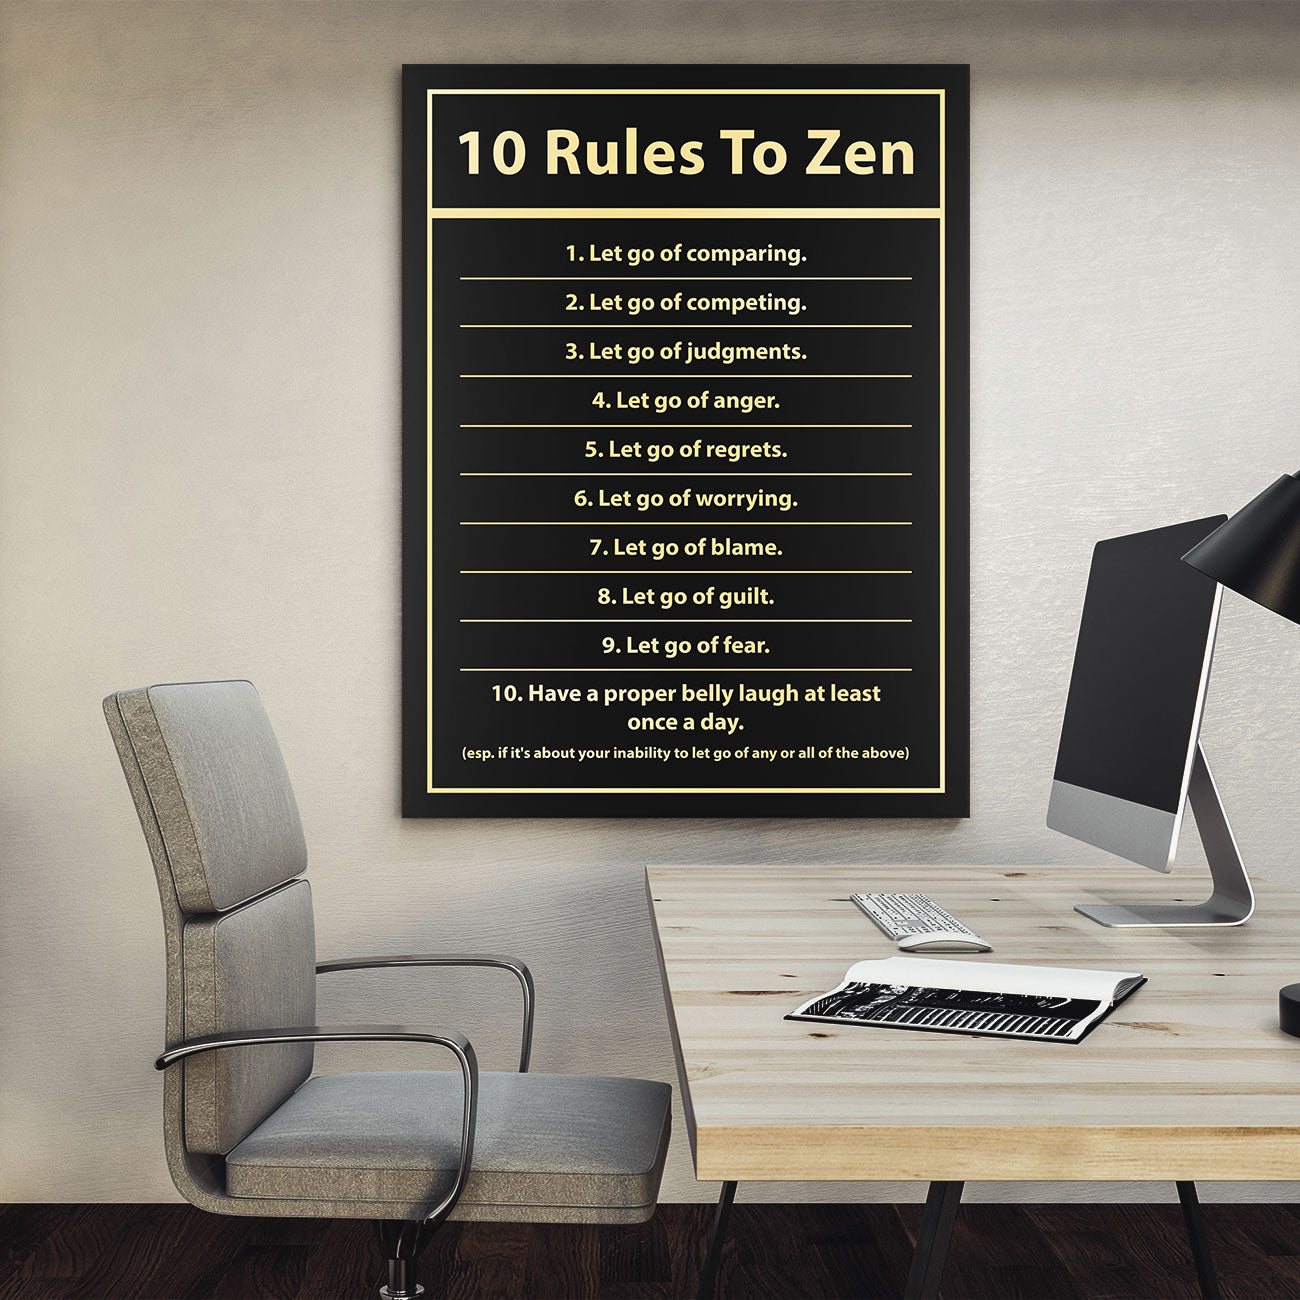 10 Rules To Zen